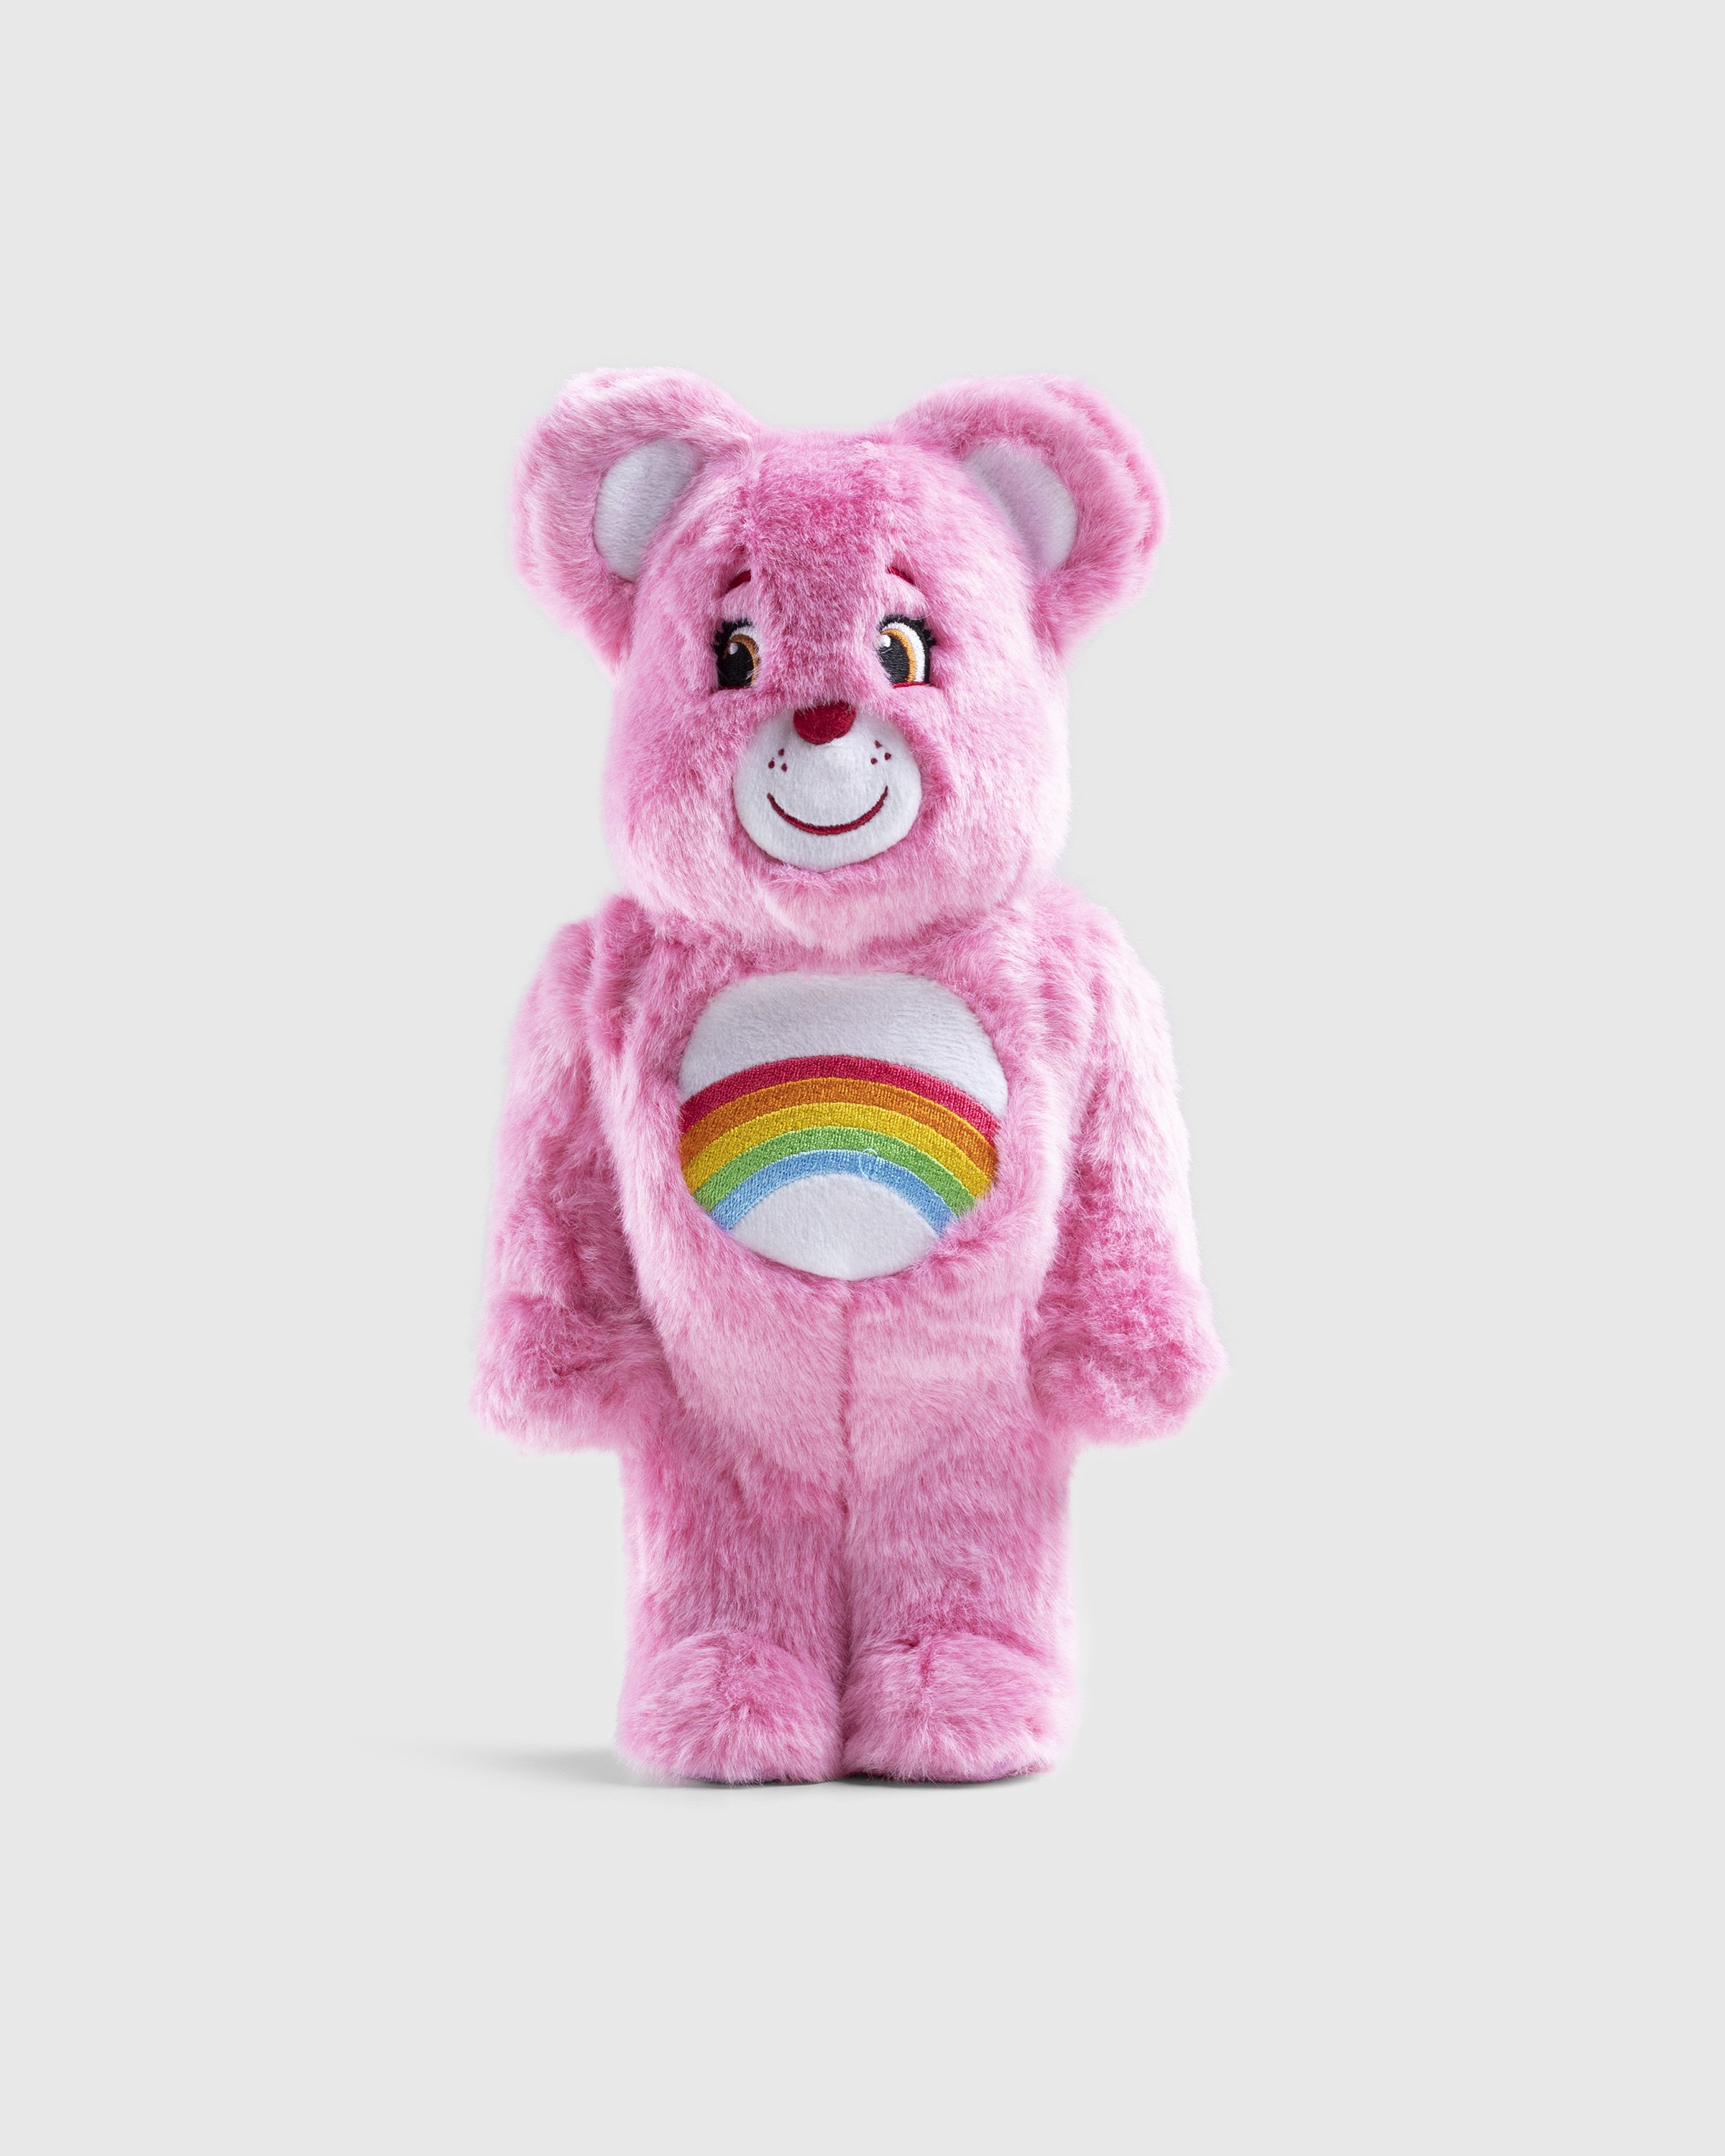 Medicom - Be@rbrick Cheer Bear Costume Version 400% Pink - Lifestyle - Pink - Image 1